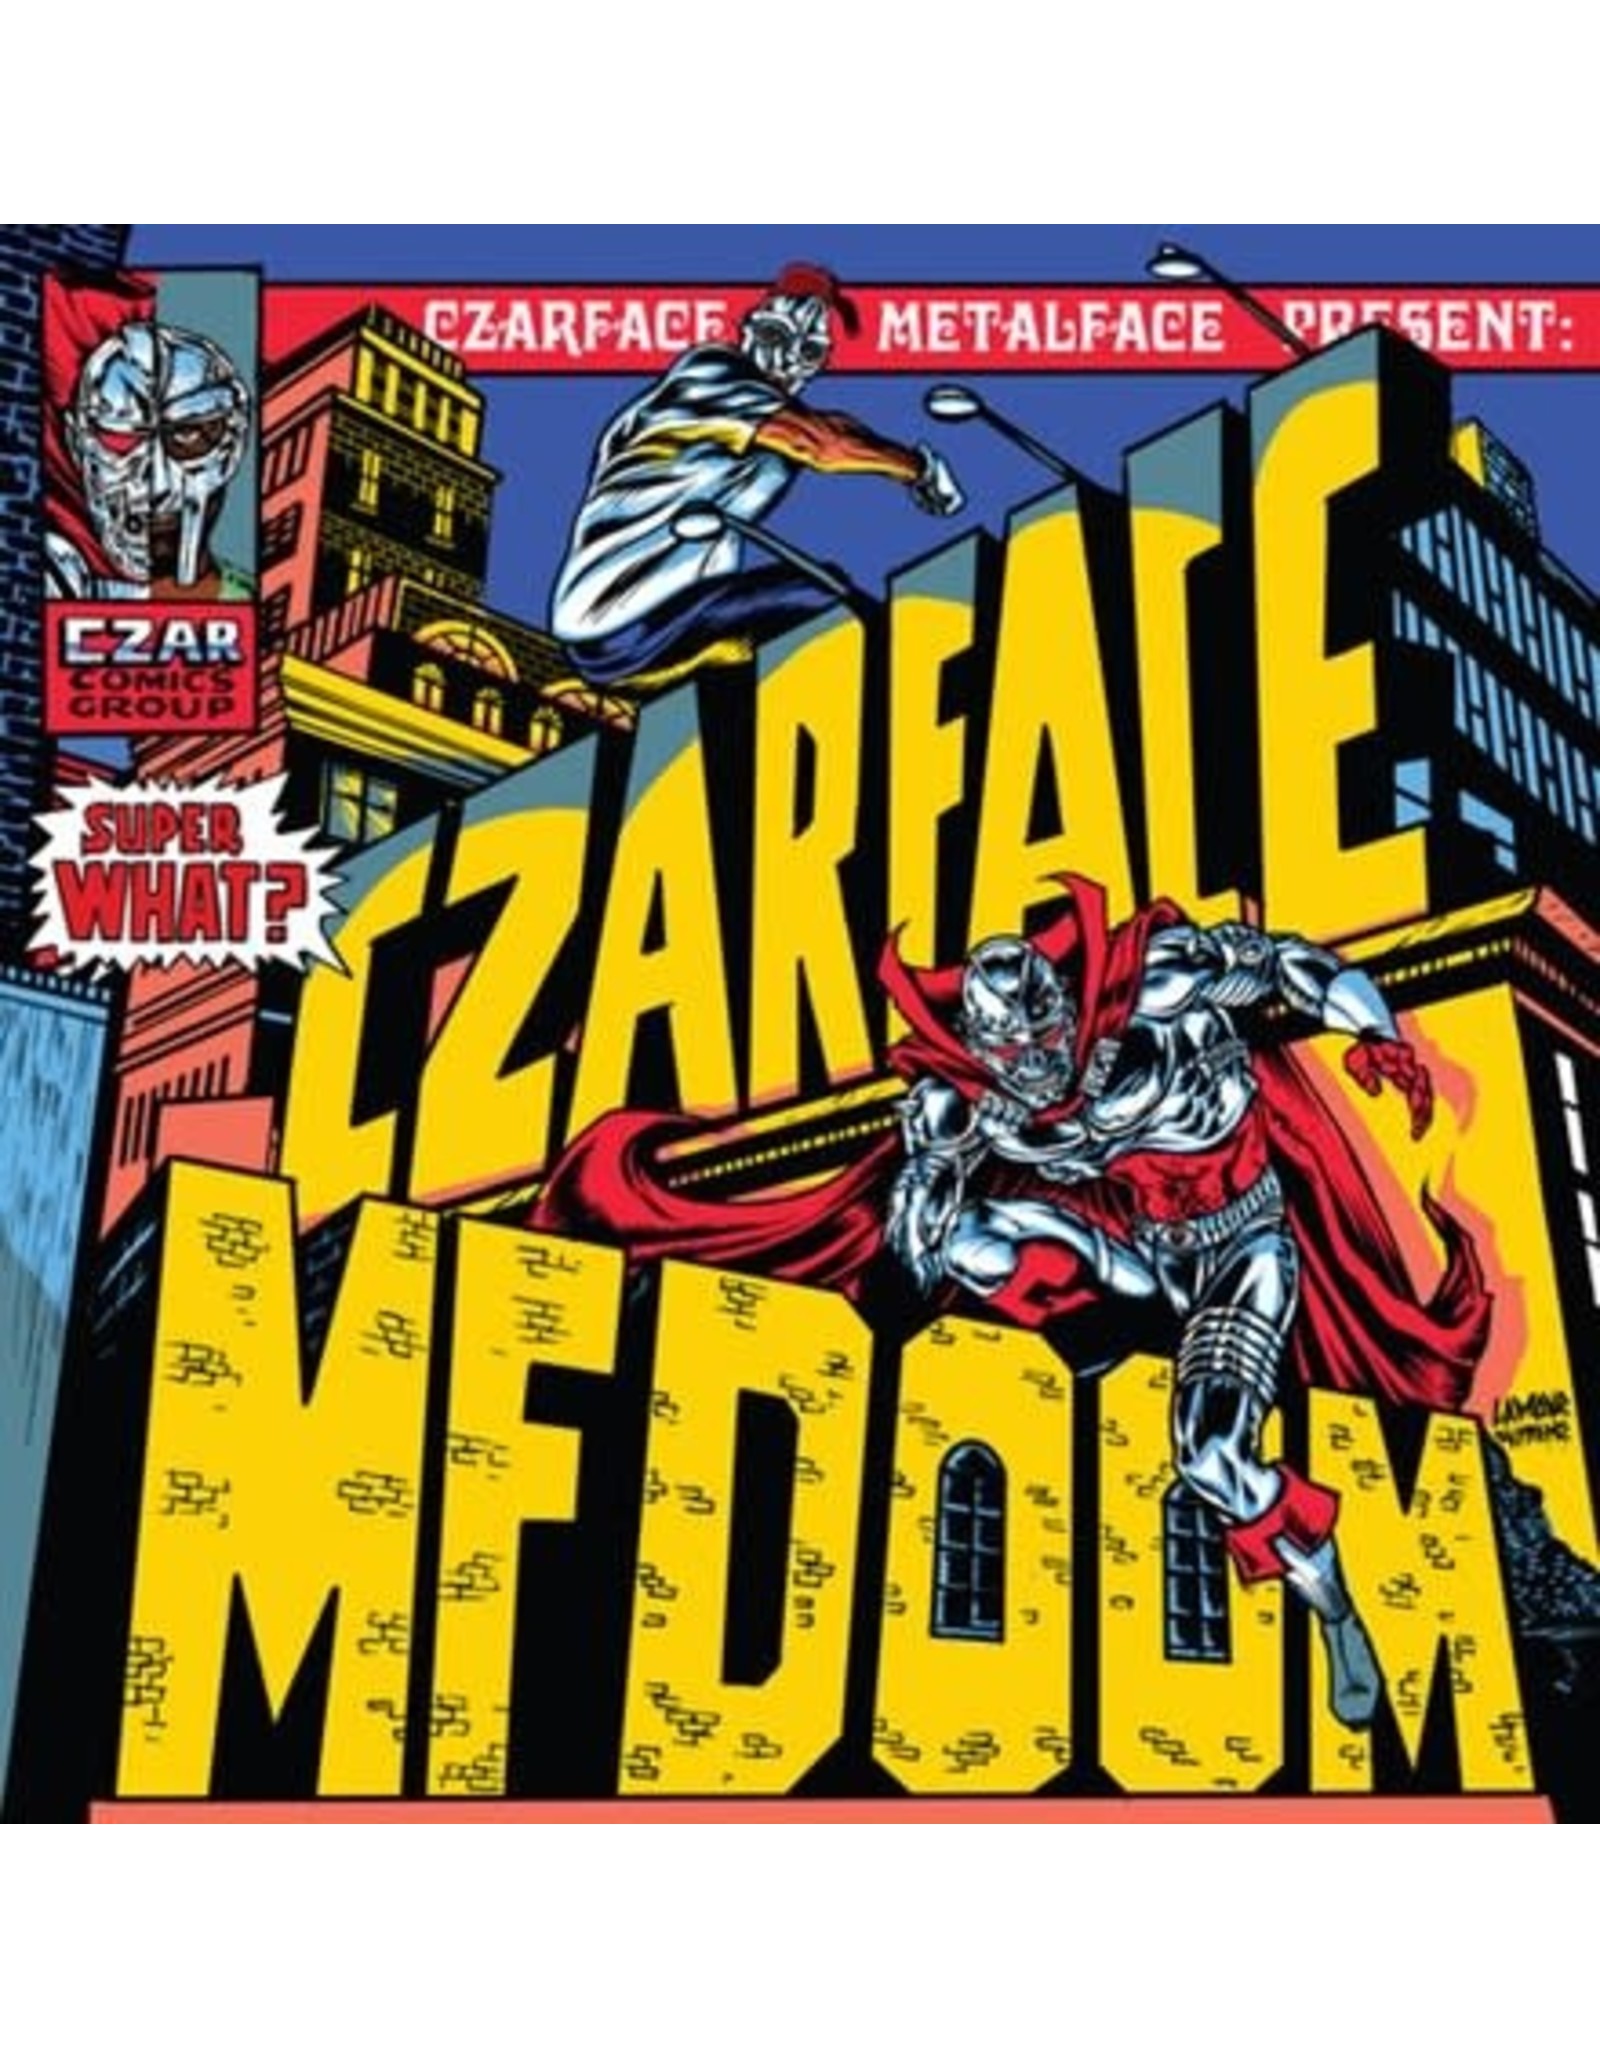 Silver Age Czarface & MF Doom: Super What? LP